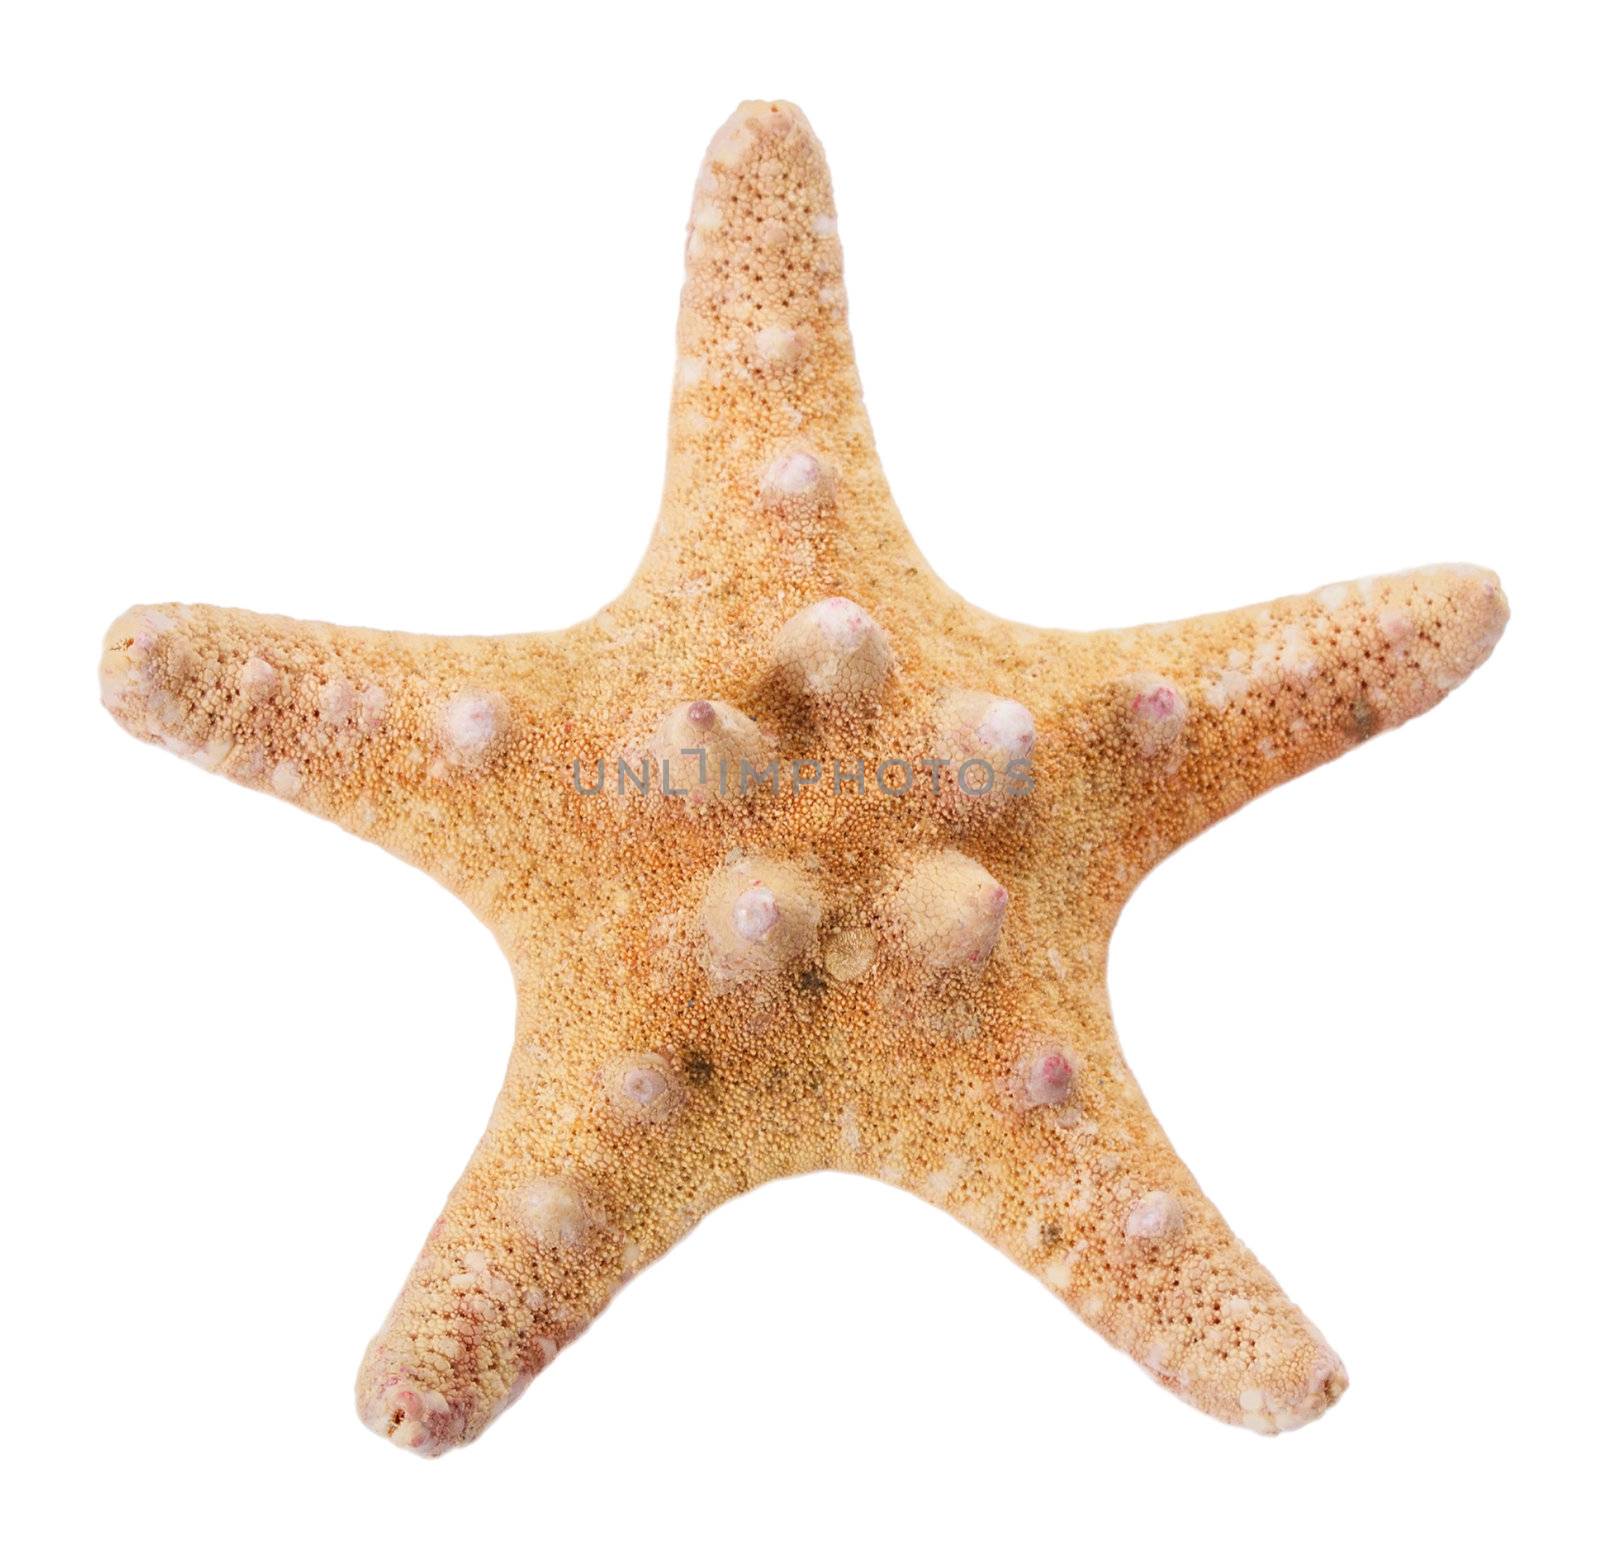 close-up starfish by Alekcey